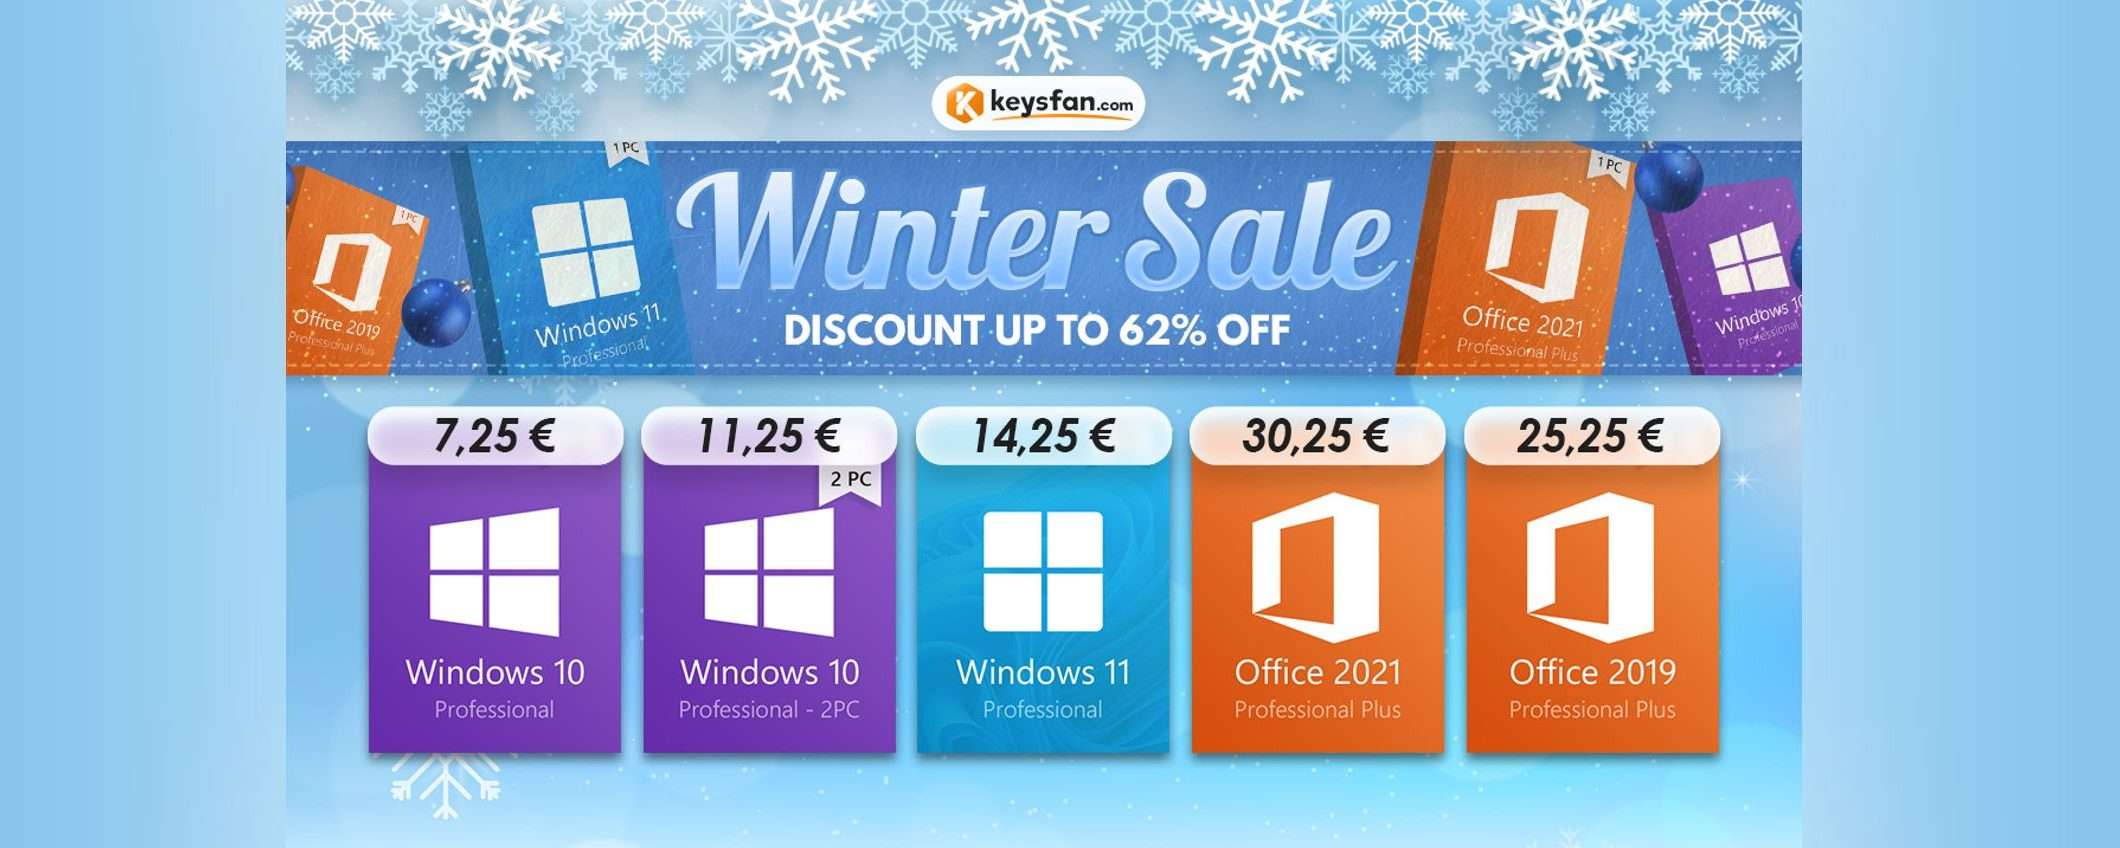 Saldi invernali, su Keysfan la licenza Windows parte da 7,25 euro